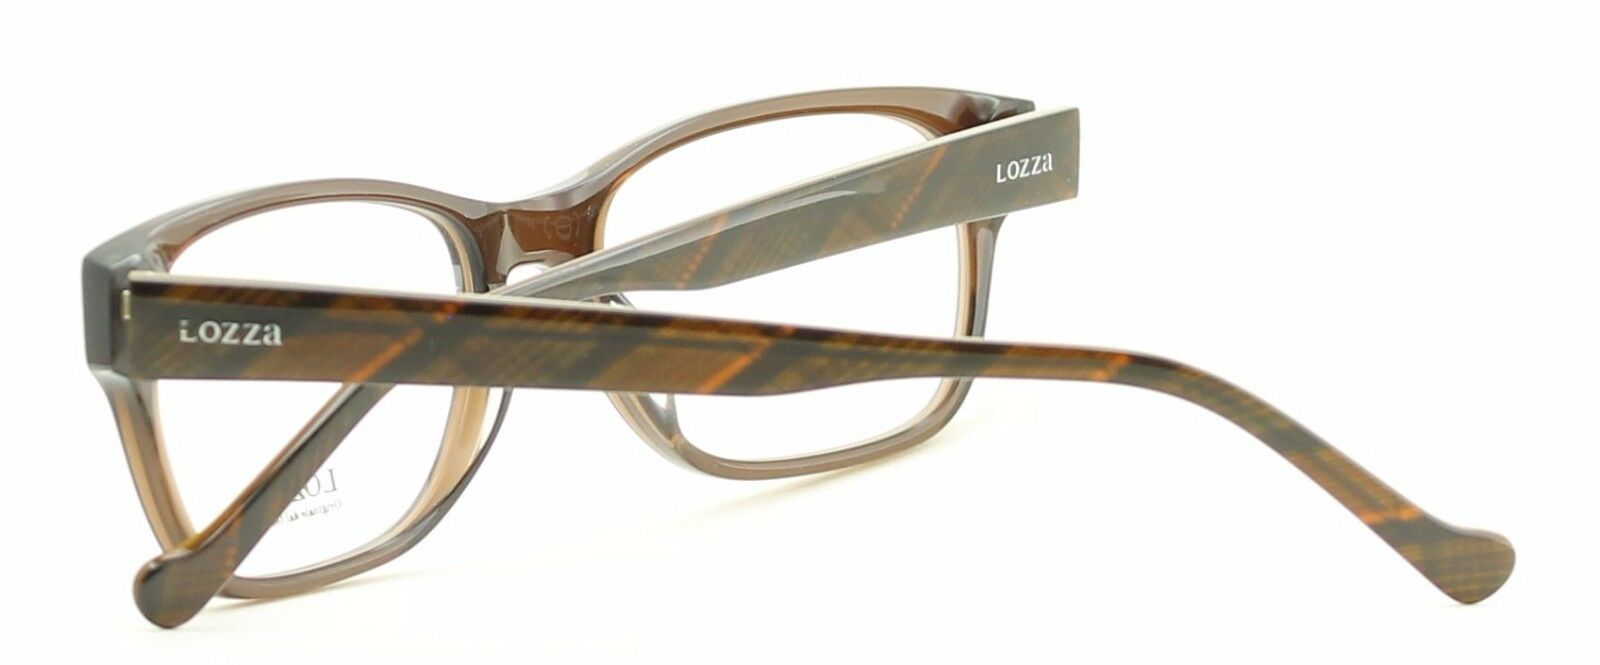 LOZZA VL 4110 COL. 0AQH Eyewear FRAMES RX Optical Eyeglasses Glasses - New